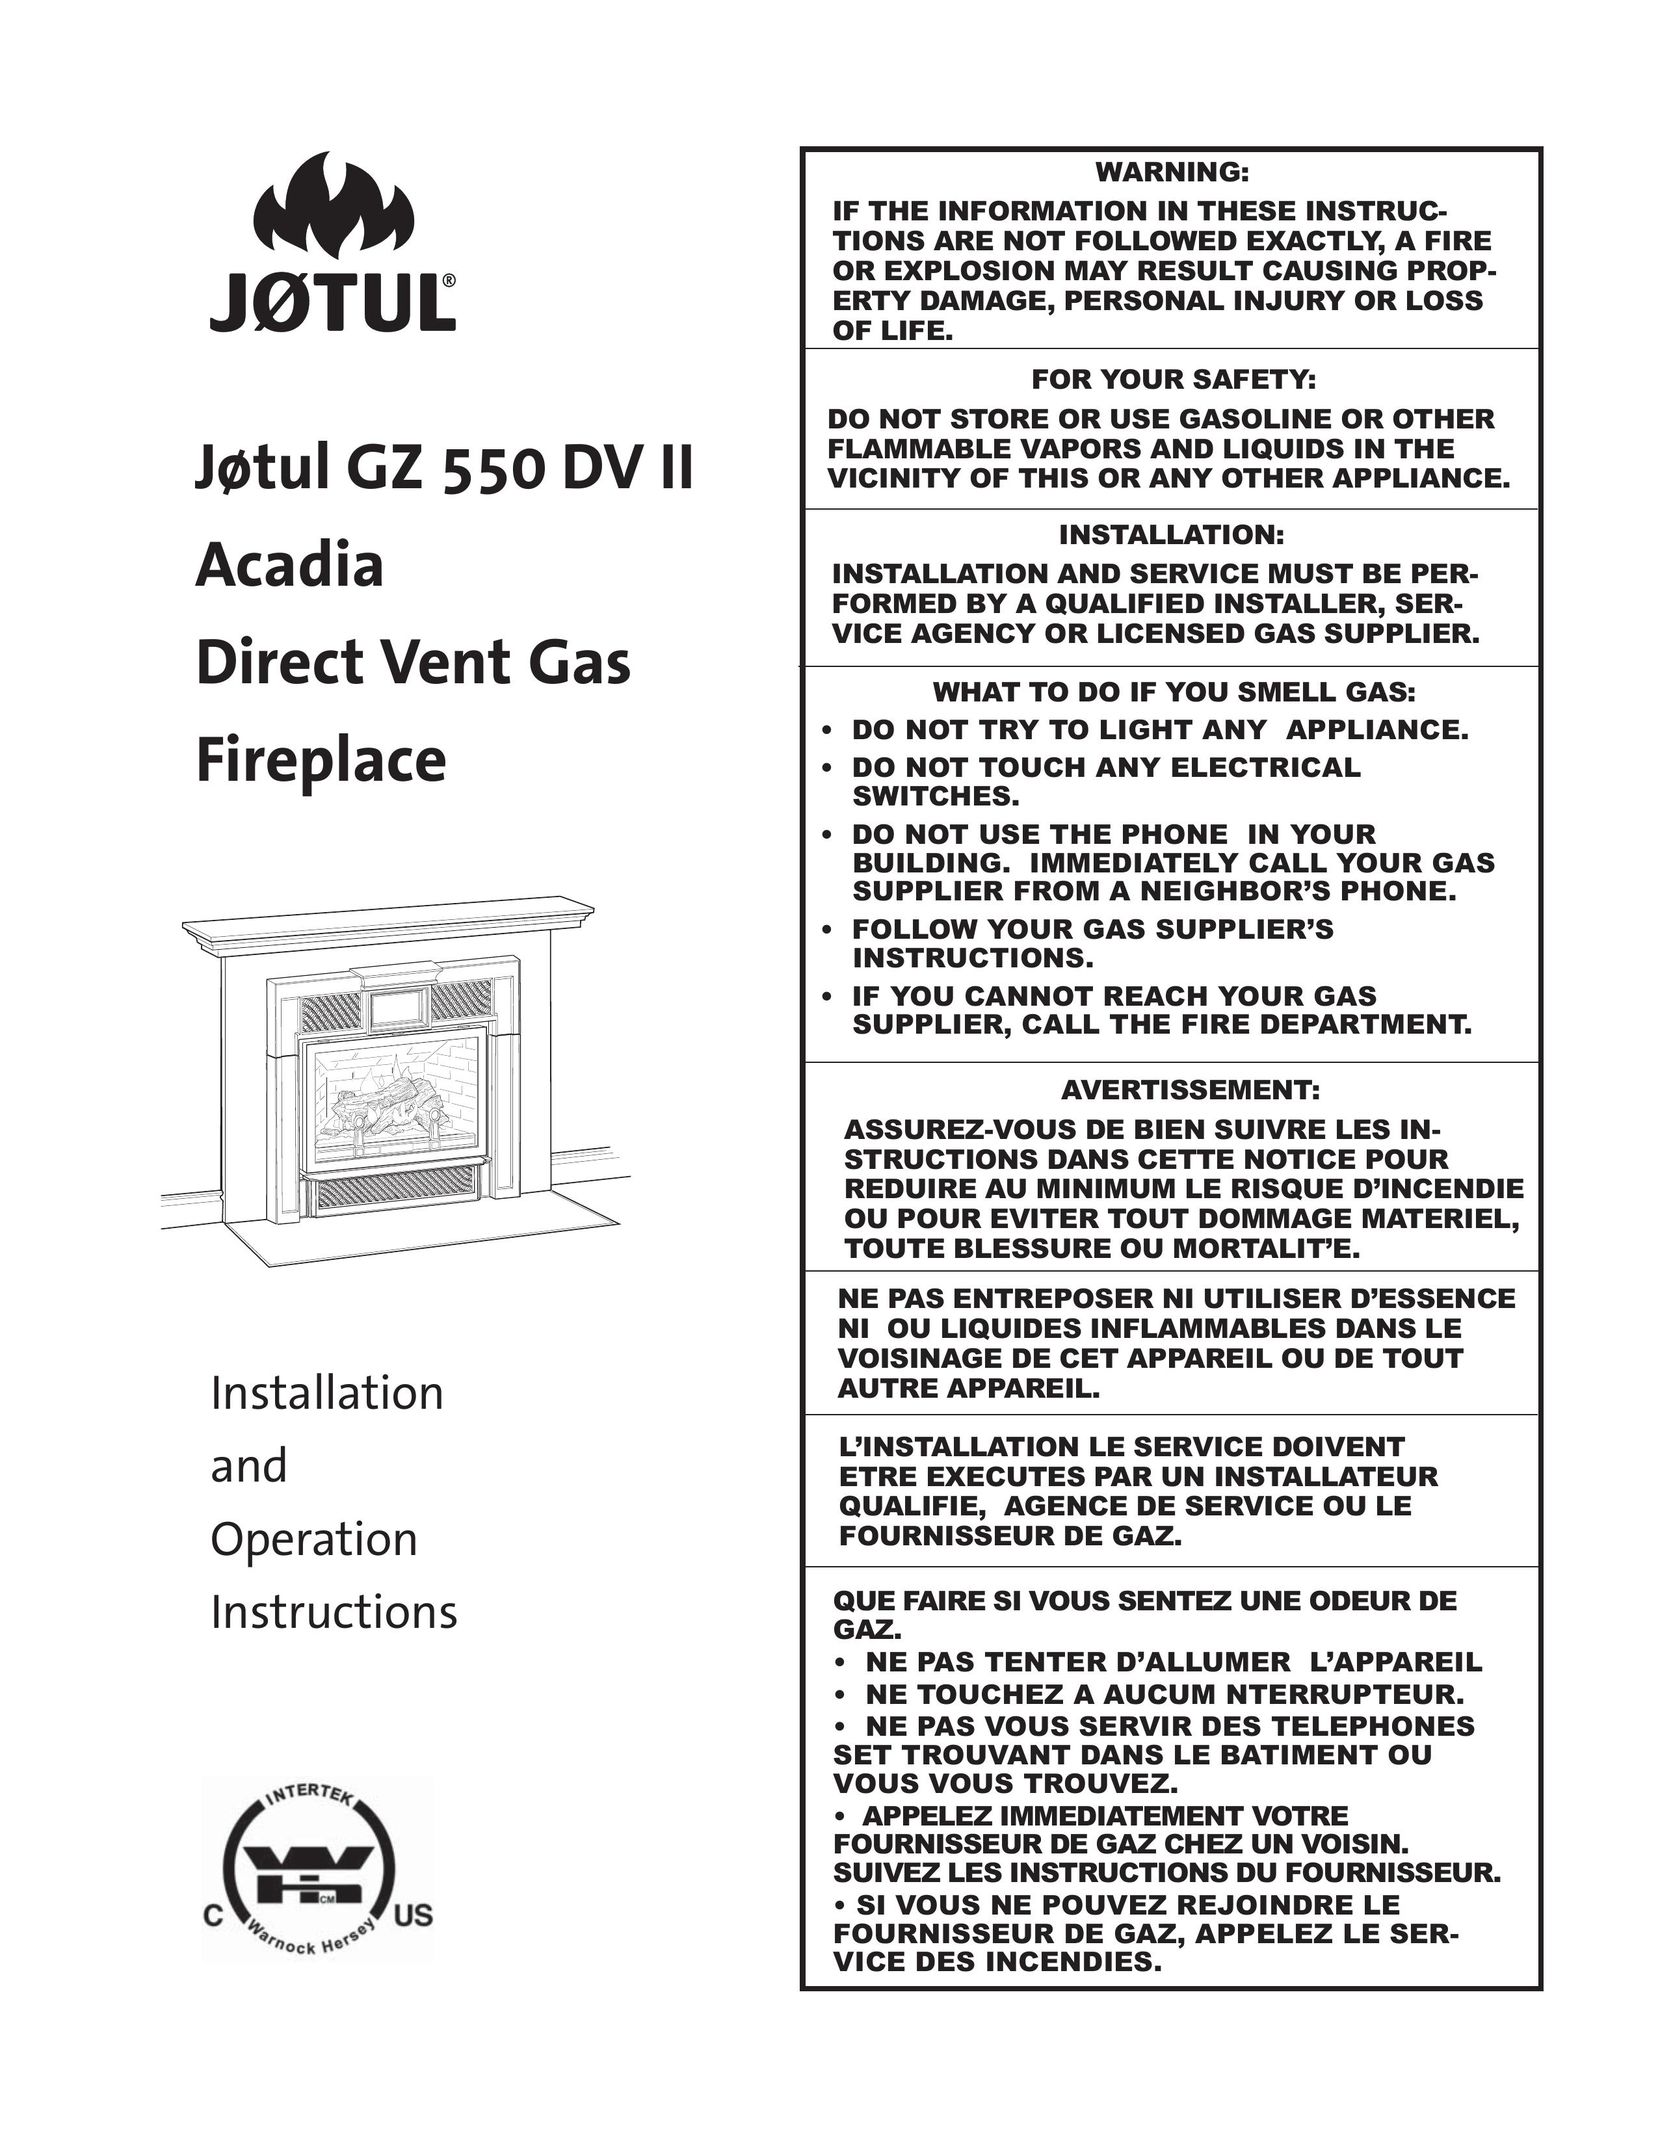 Jotul GZ 550 DV II Indoor Fireplace User Manual